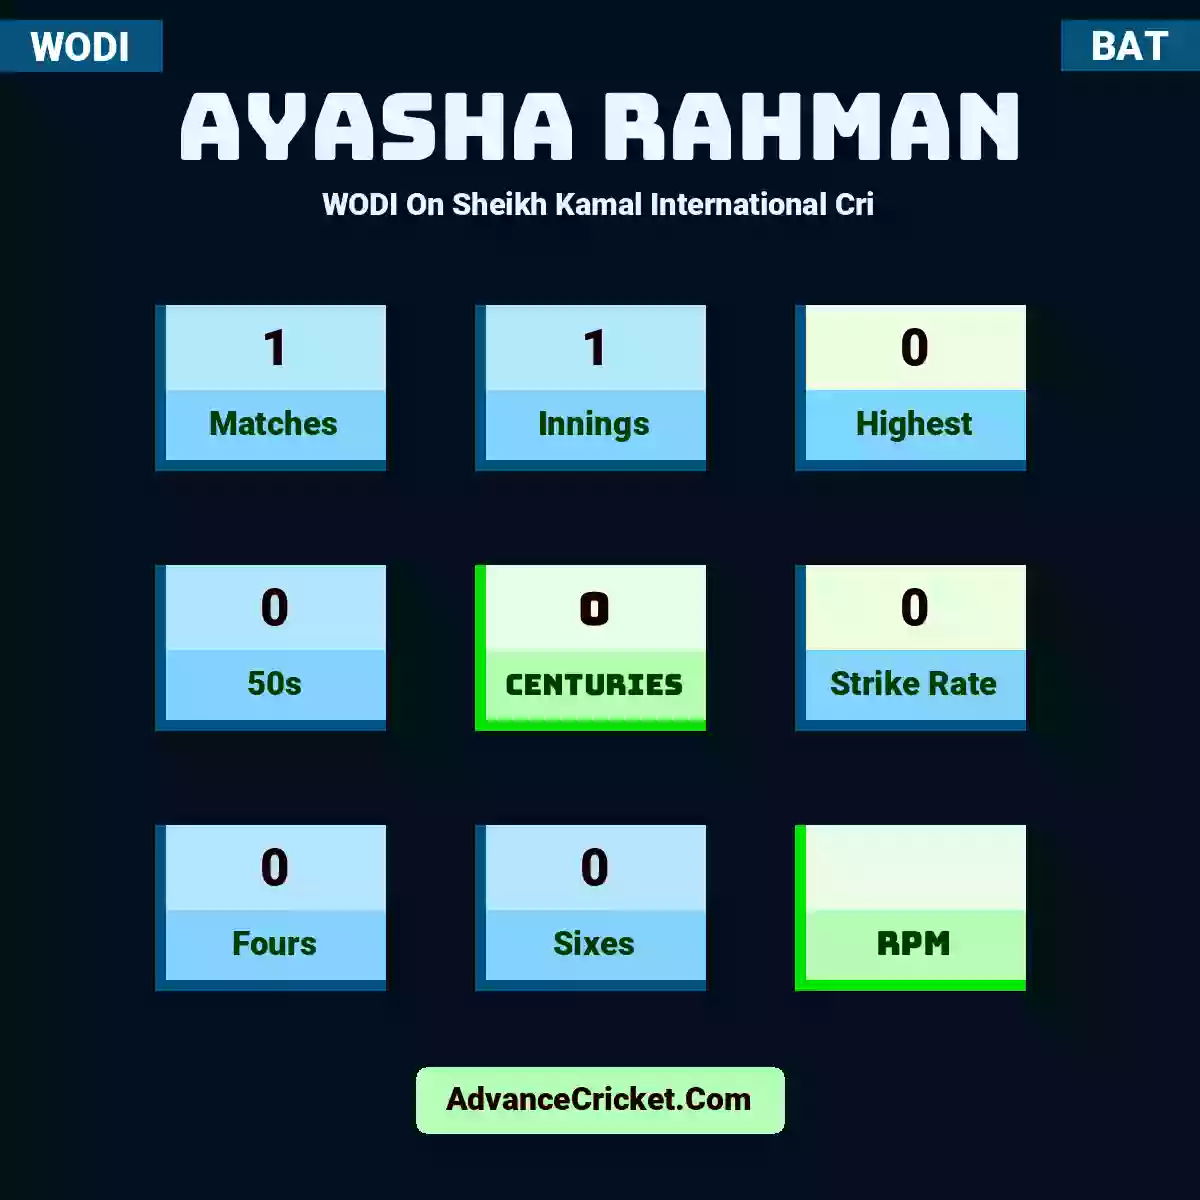 Ayasha Rahman WODI  On Sheikh Kamal International Cri, Ayasha Rahman played 1 matches, scored 0 runs as highest, 0 half-centuries, and 0 centuries, with a strike rate of 0. A.Rahman hit 0 fours and 0 sixes.